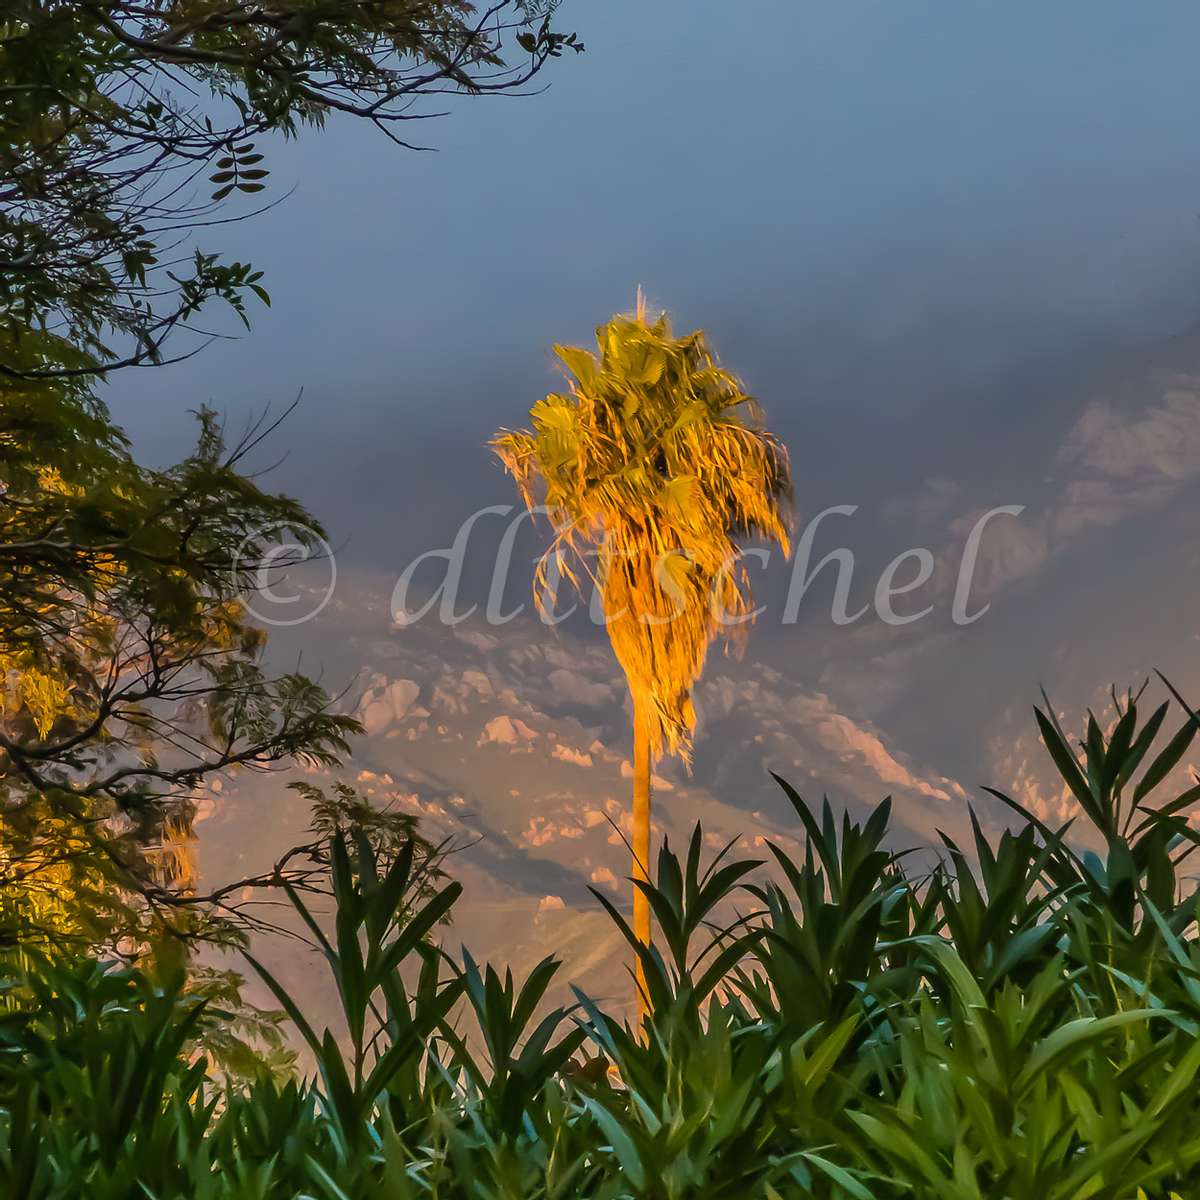 Palm tree at sunset